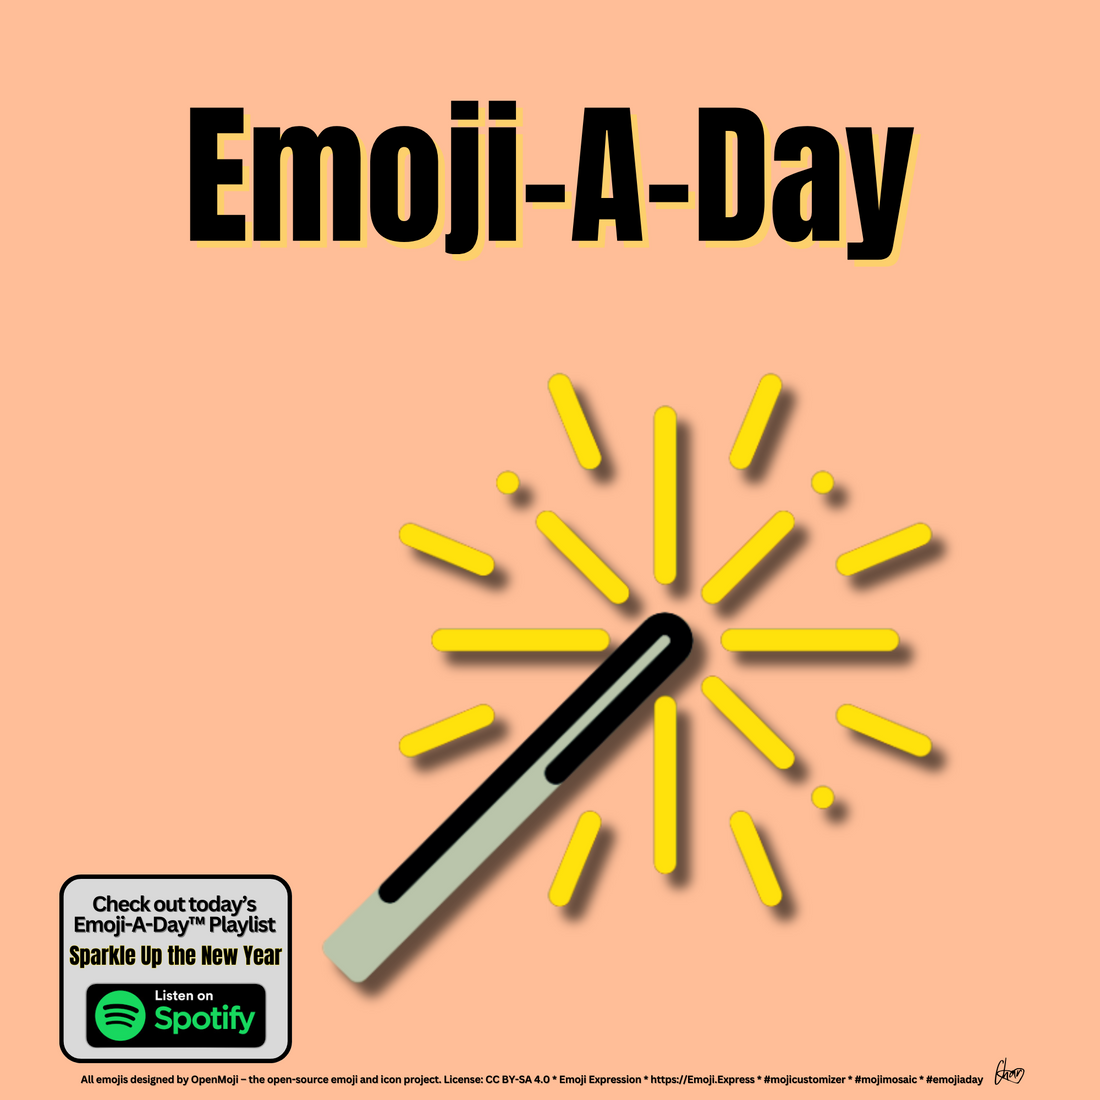 Emoij-A-Day theme with Sparkler emoji and Sparkle Your New Year Spotify Playlist